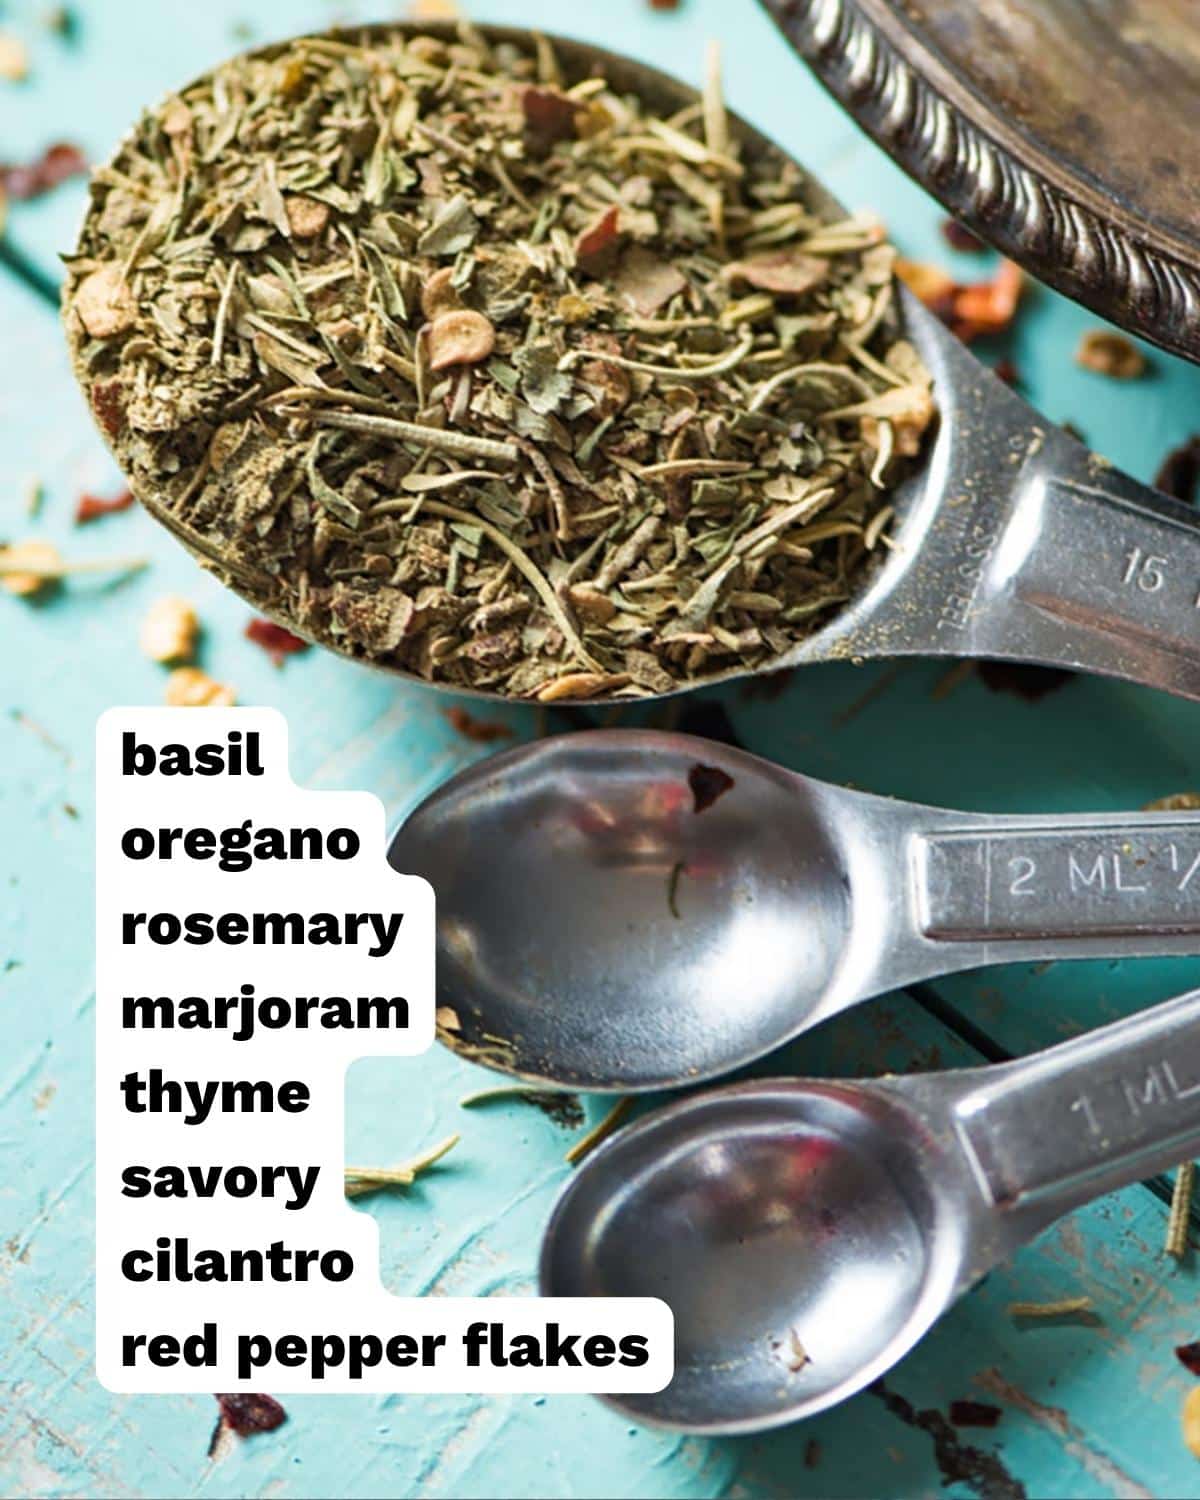 ingredients for italian seasoning listed on an image of teaspoons